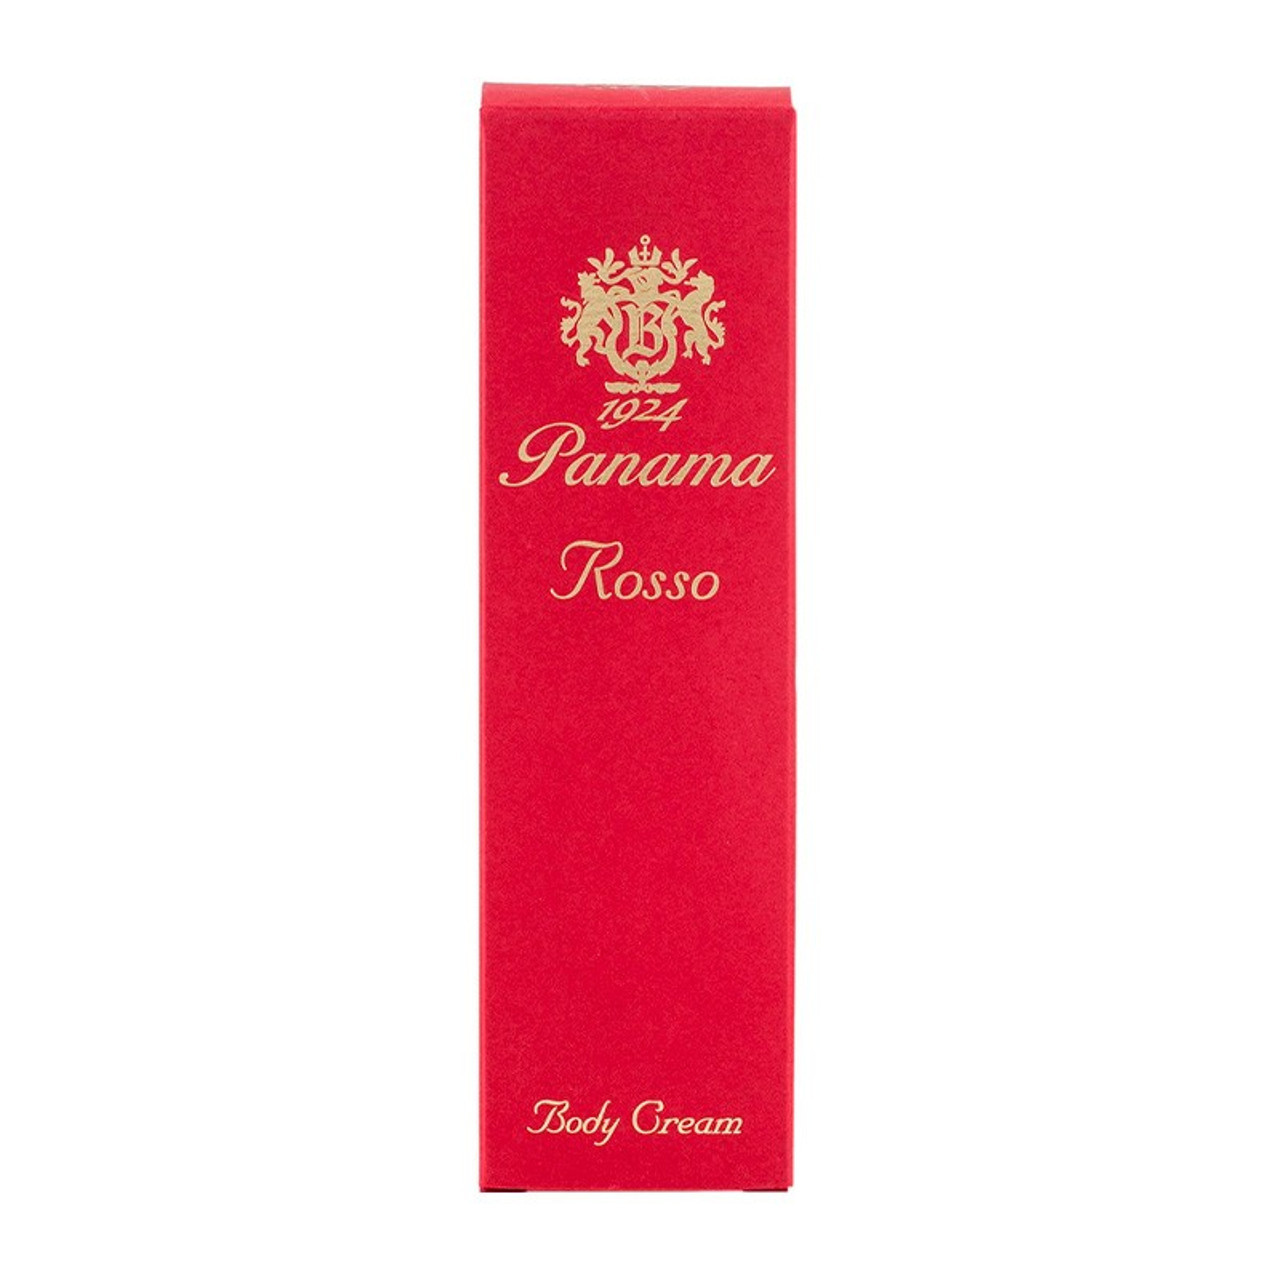 Image of Panama Rosso - Body Cream 100 ml